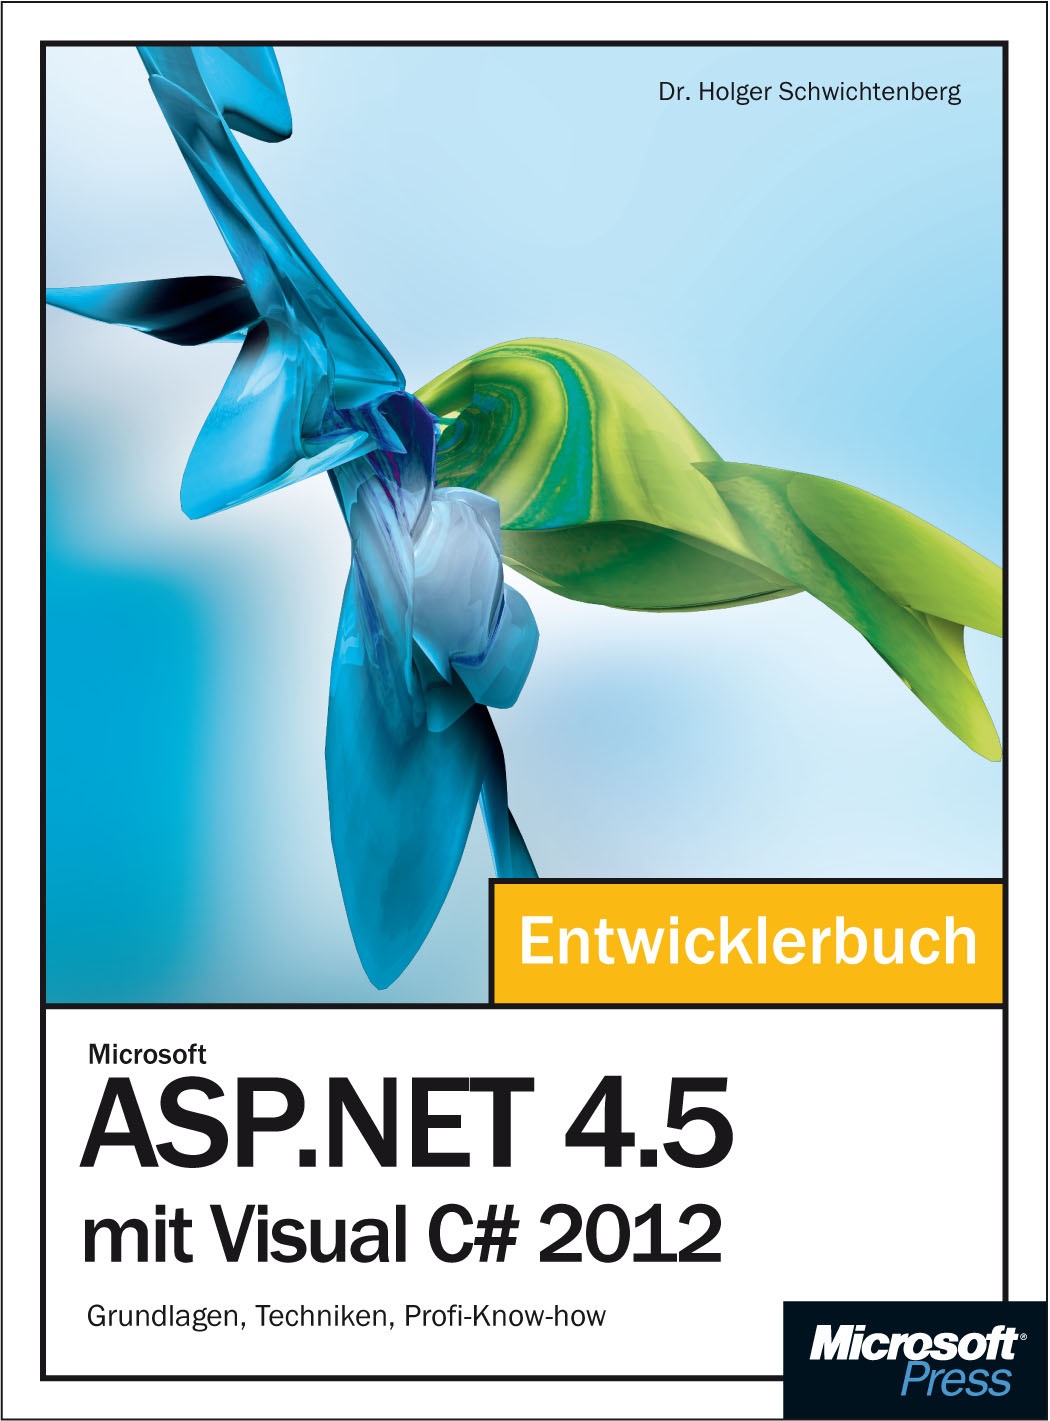 Microsoft ASP.NET 4.5 - Entwicklerbuch (Microsoft Press, 2013)